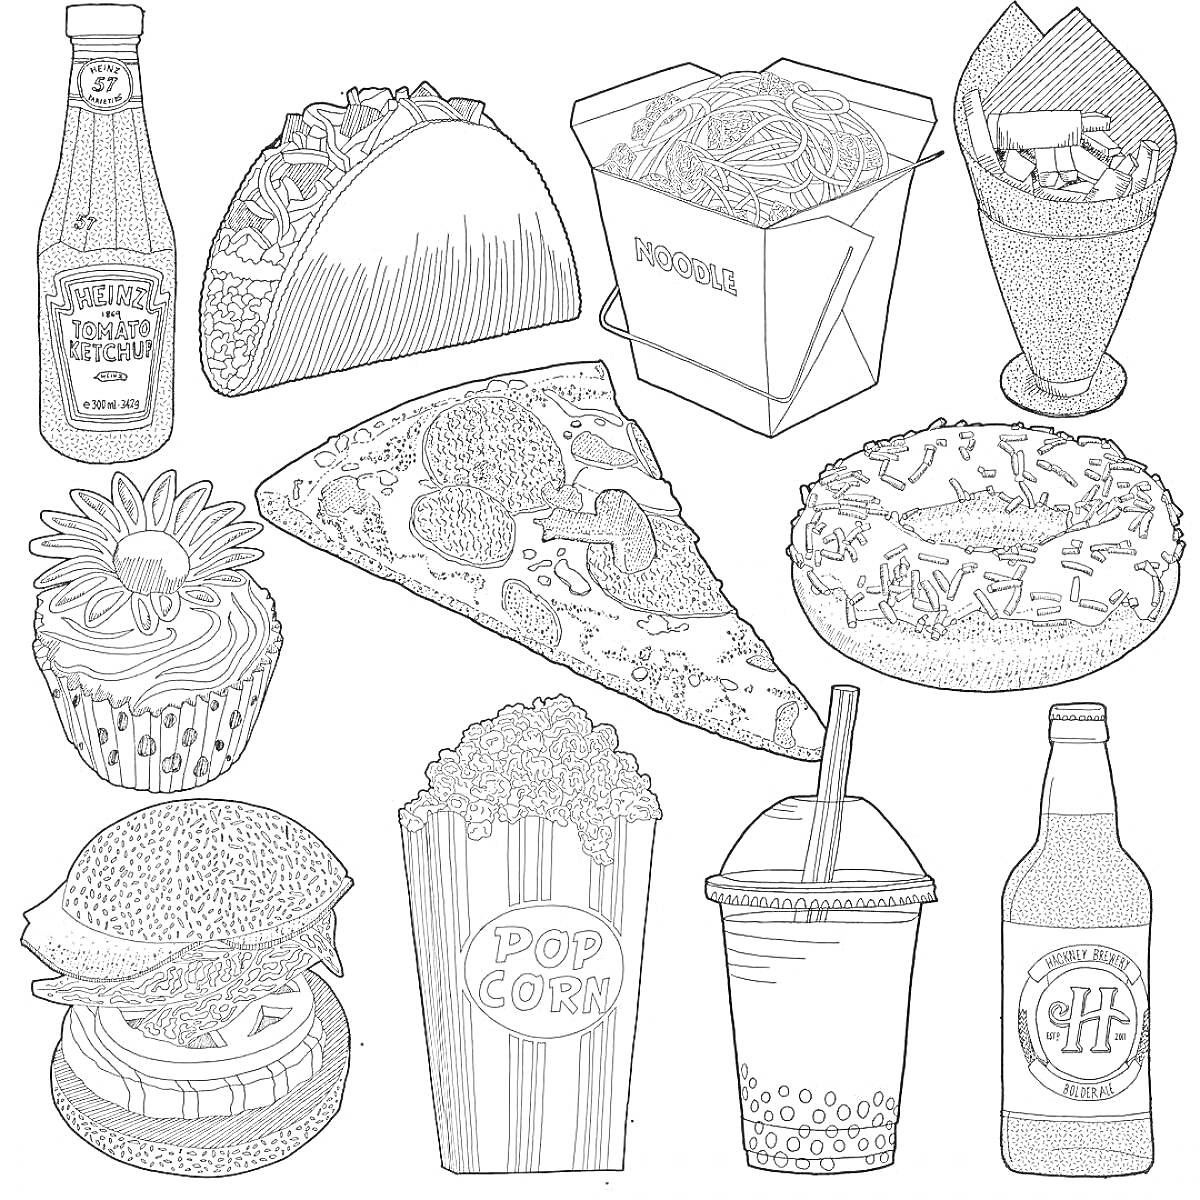 Раскраска Фаст-фуд: бутылка кетчупа, тако, коробка лапши, стакан с картошкой фри, пончик, кекс, кусок пиццы, бургер, попкорн, напиток с трубочкой, бутылка напитка